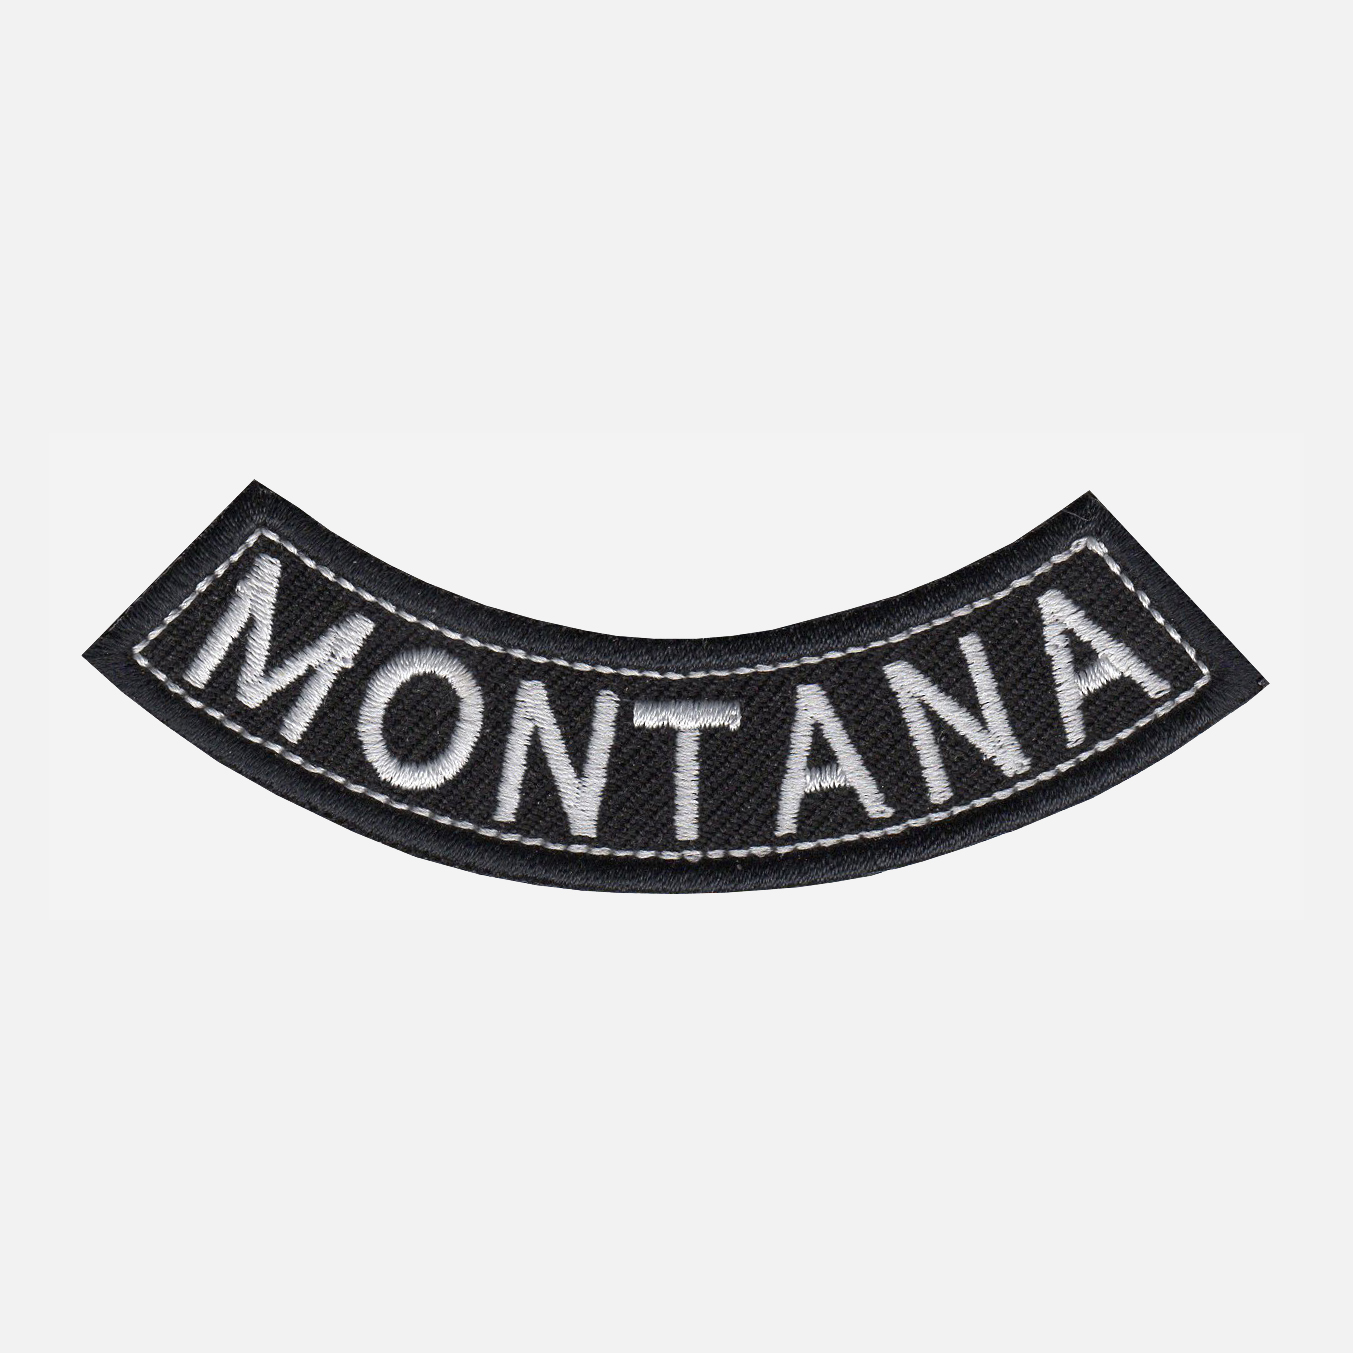 Montana Mini Bottom Rocker Embroidered Vest Patch